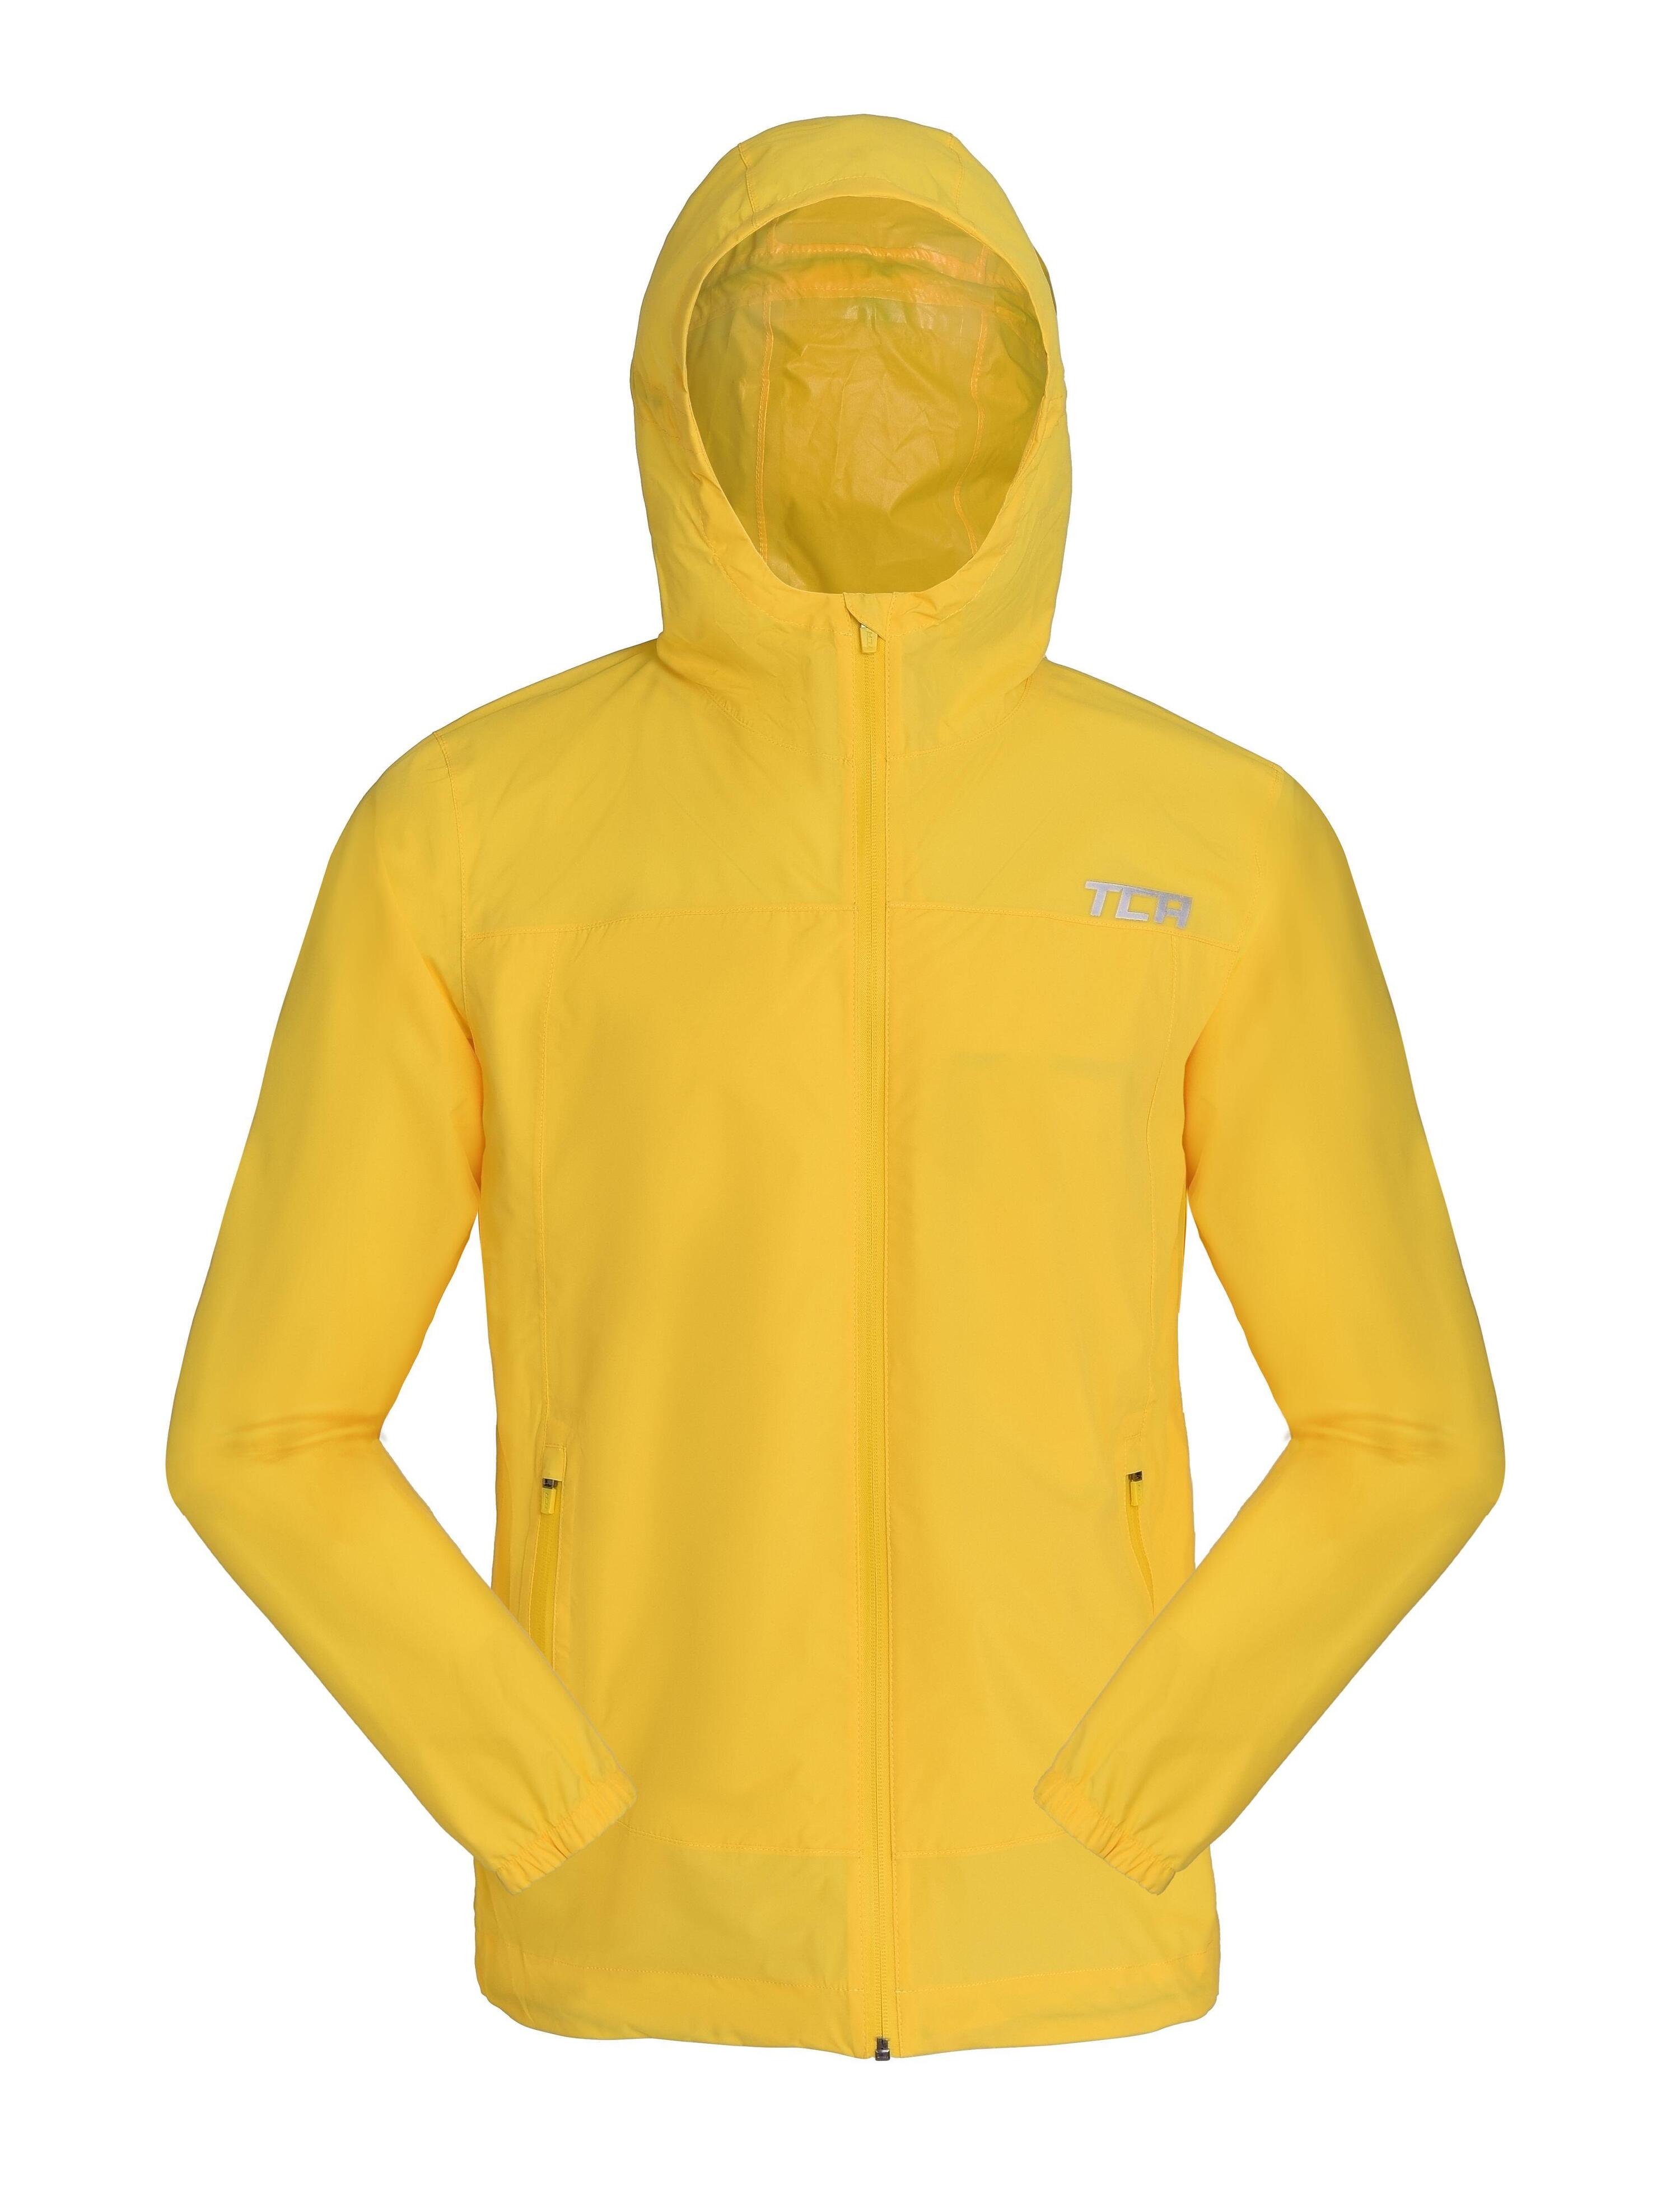 Boys' AirLite Rain Jacket with Zip Pockets - Vibrant Yellow 1/5